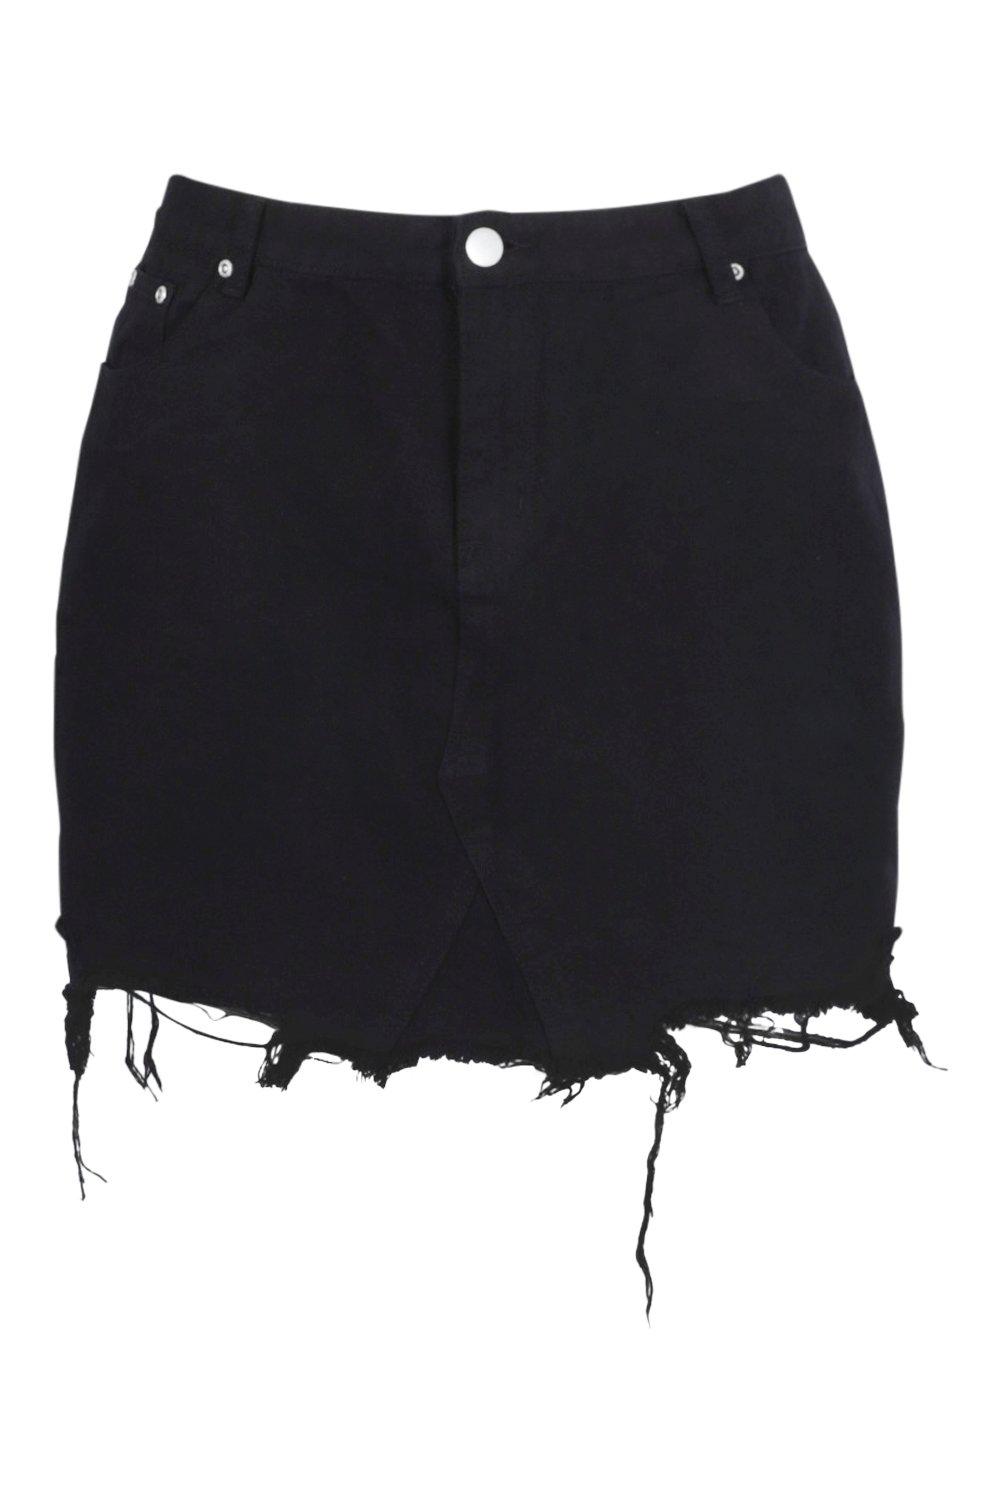 boohoo black denim skirt